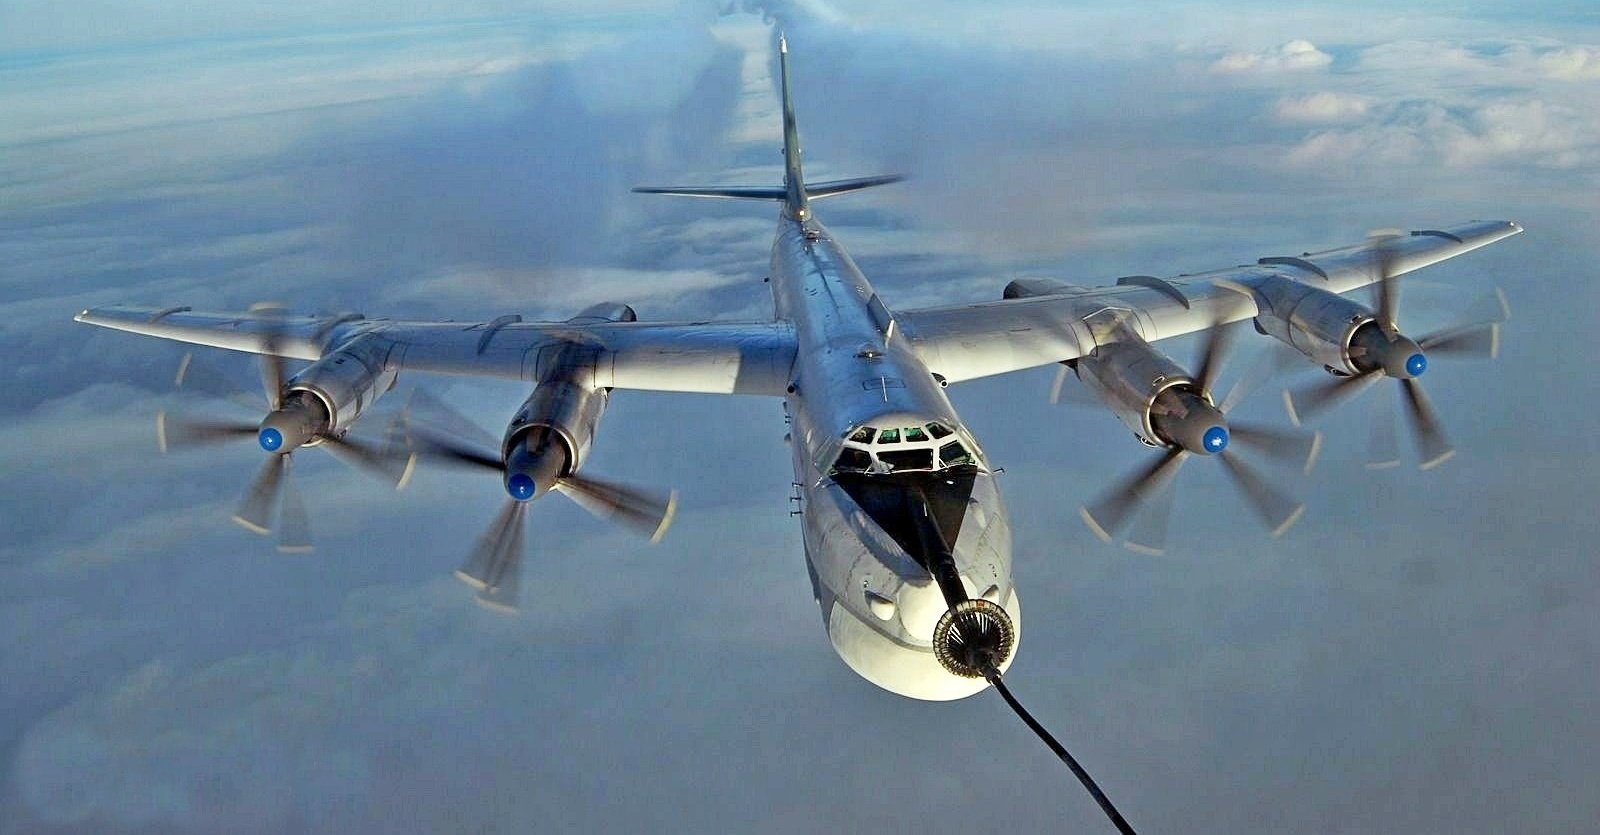 WFB: Российские бомбардировщики взяли Америку на прицел